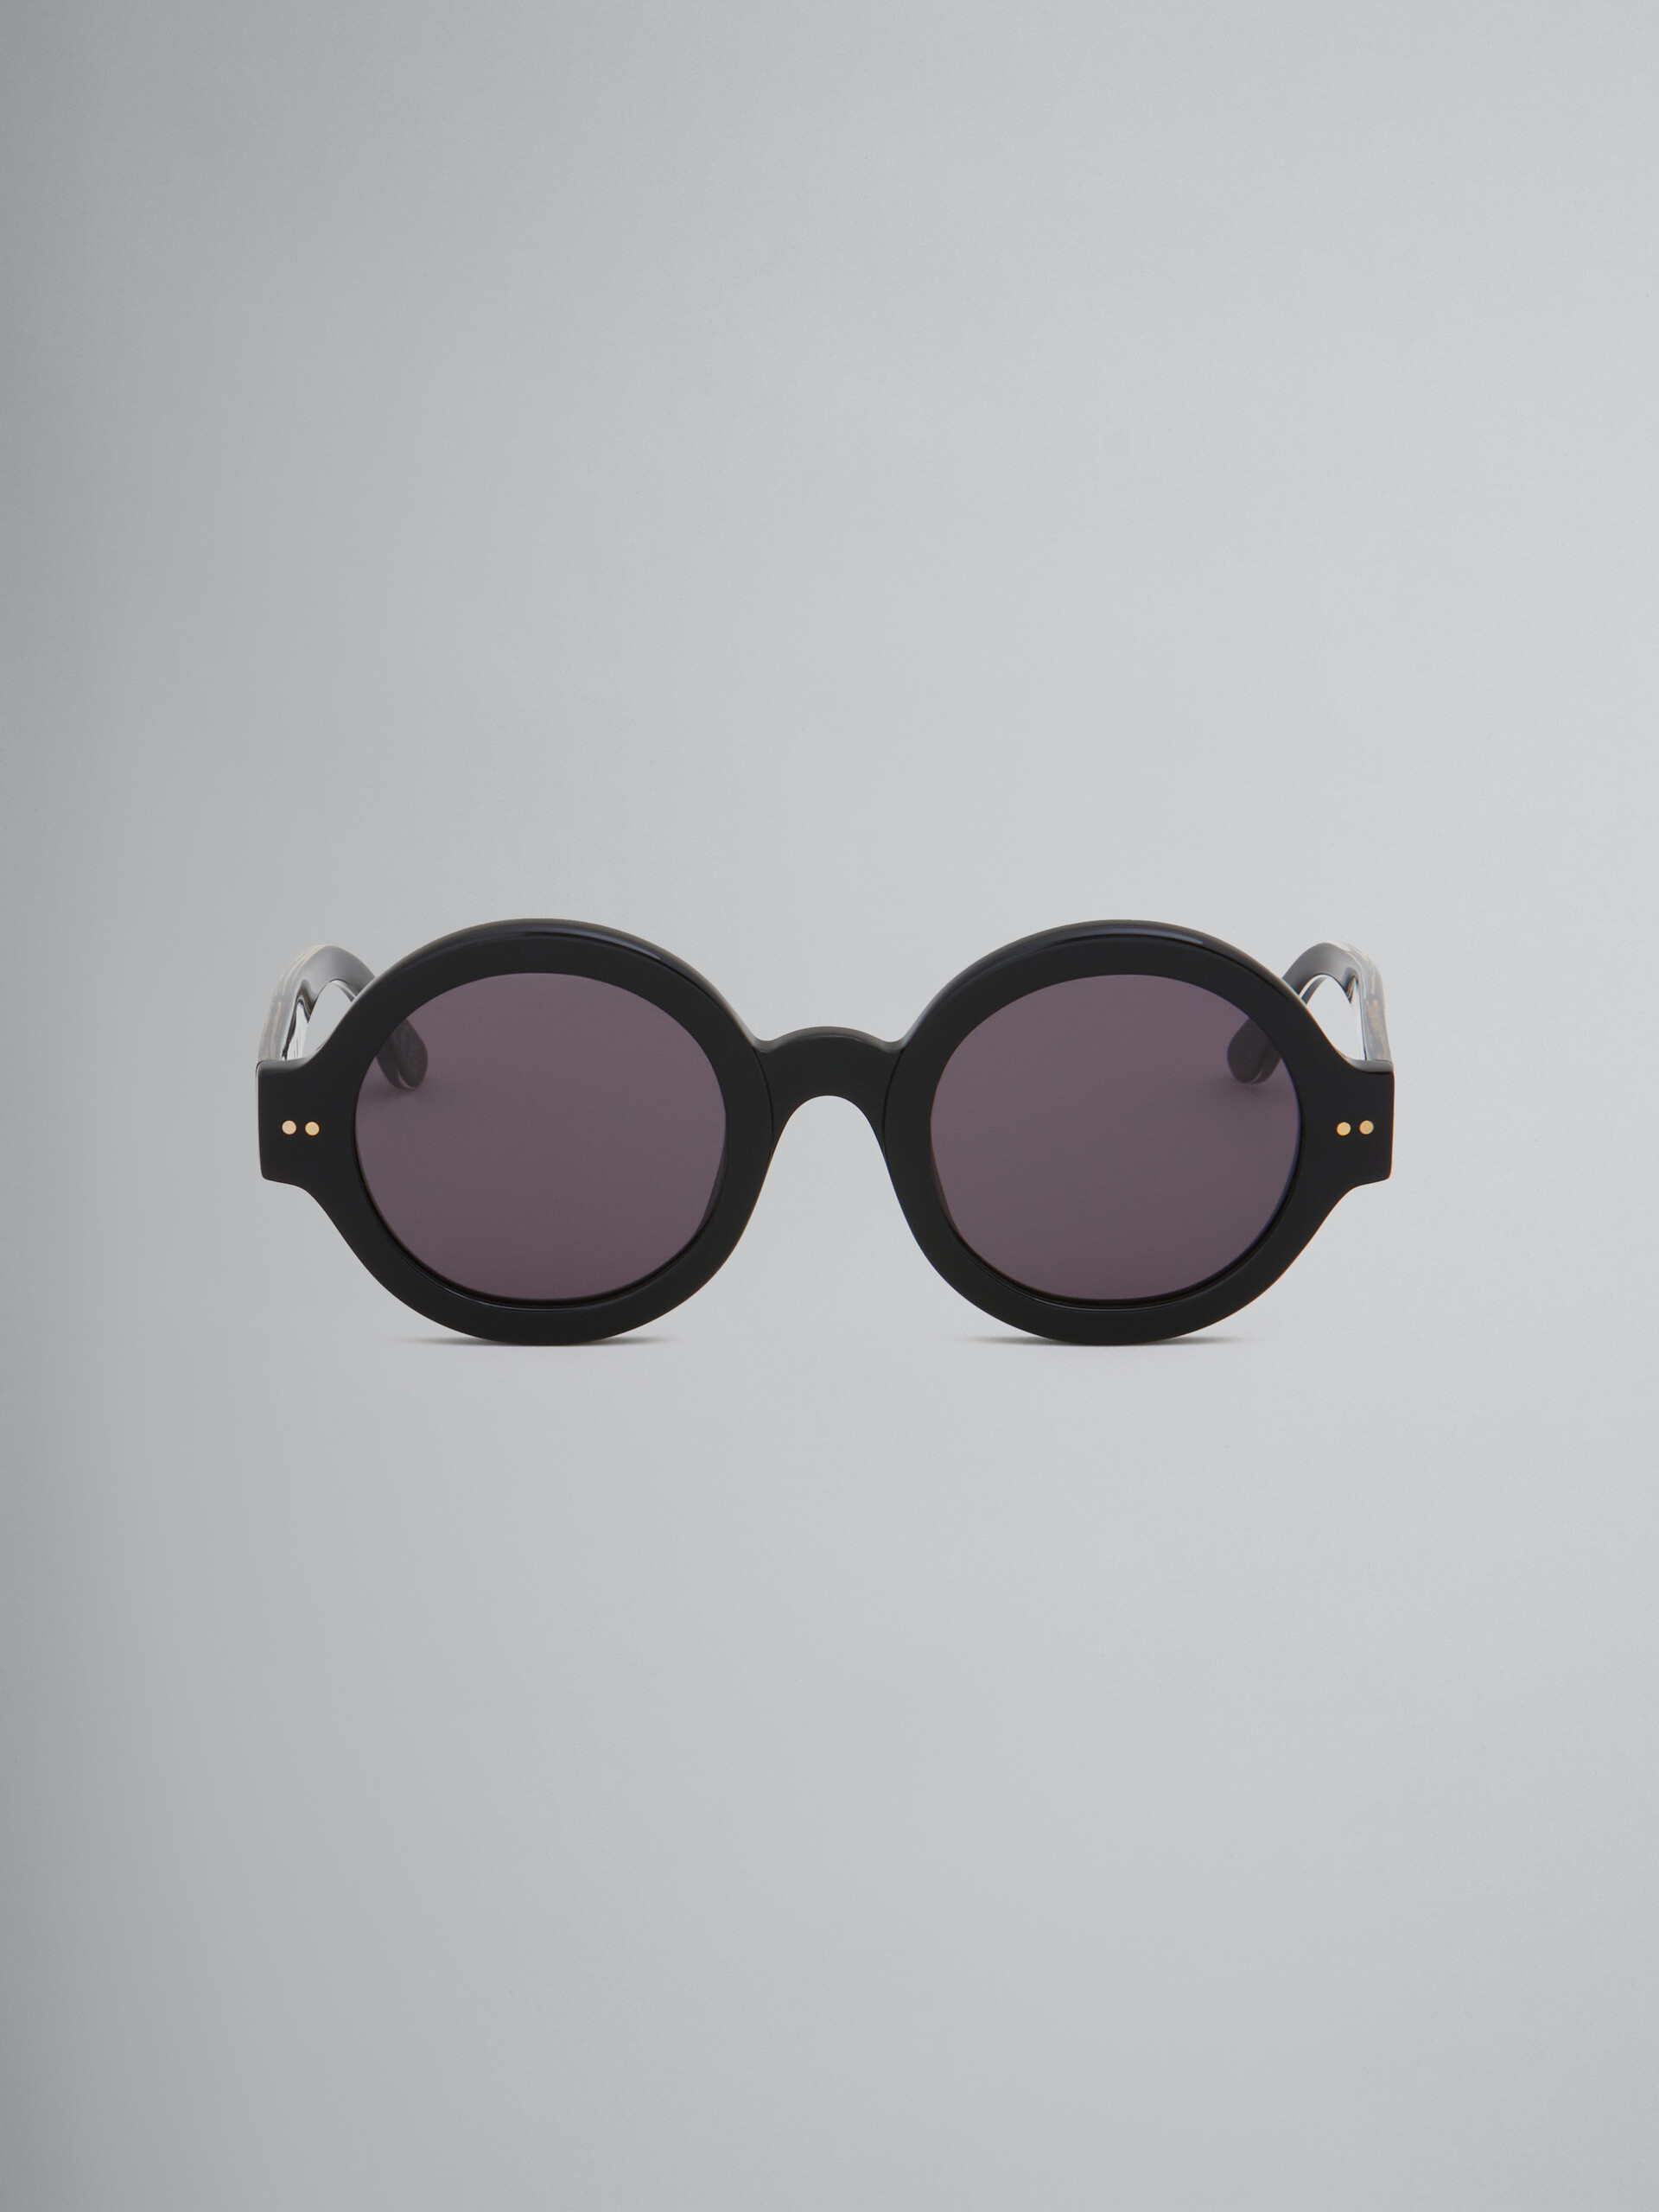 Nakagin Tower black sunglasses - Optical - Image 1